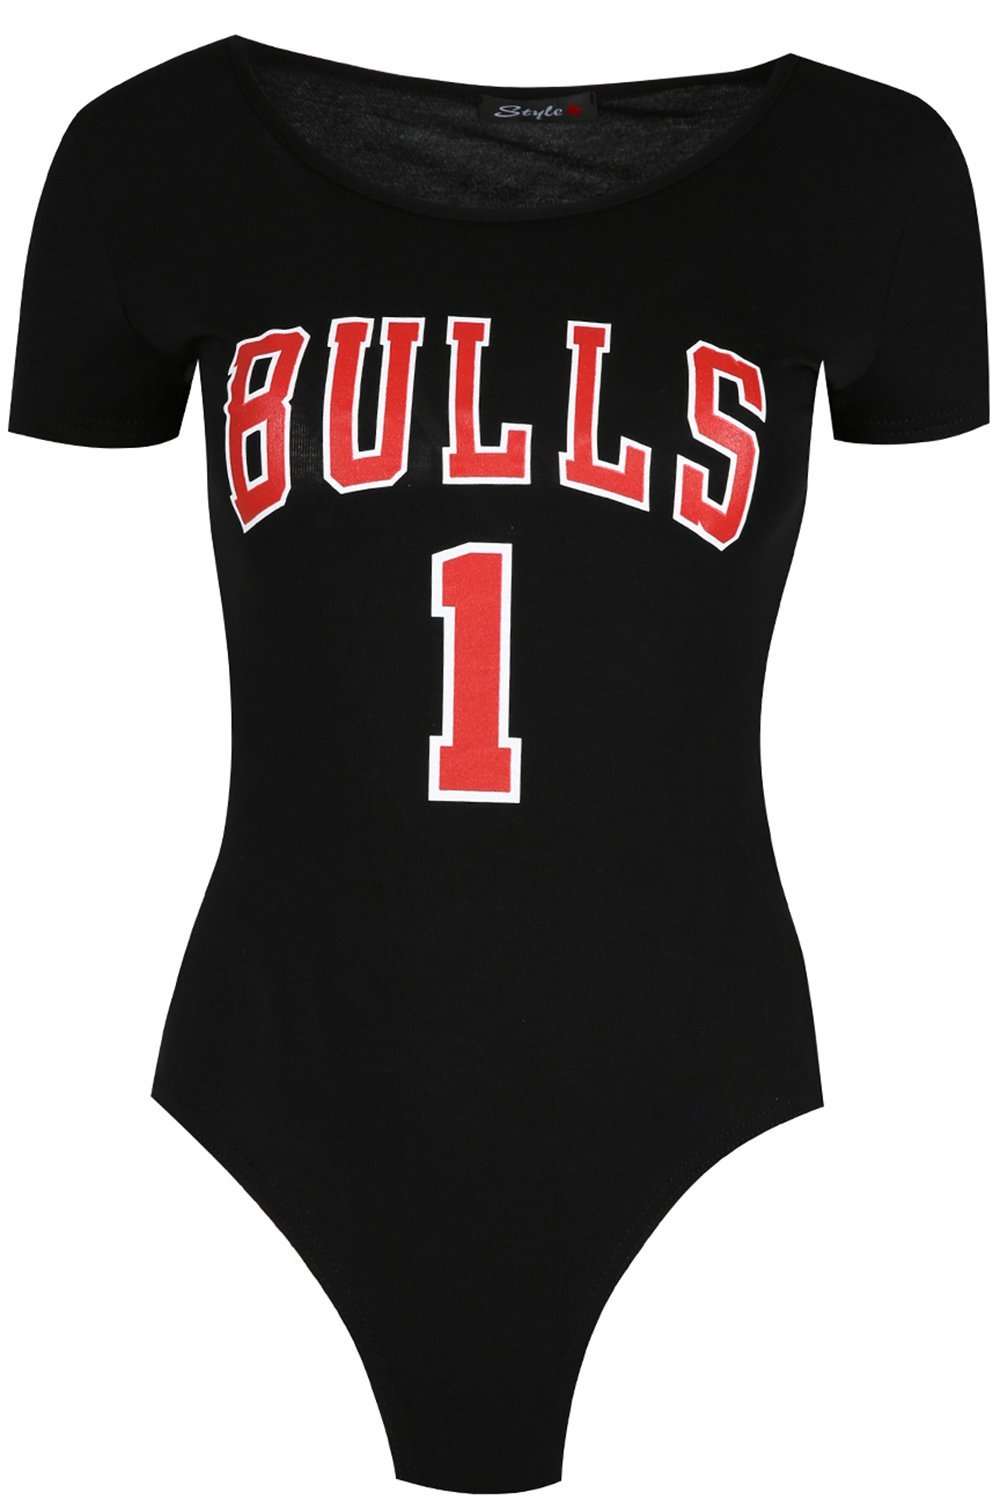 Sara Bulls Slogan Print Bodysuit - bejealous-com